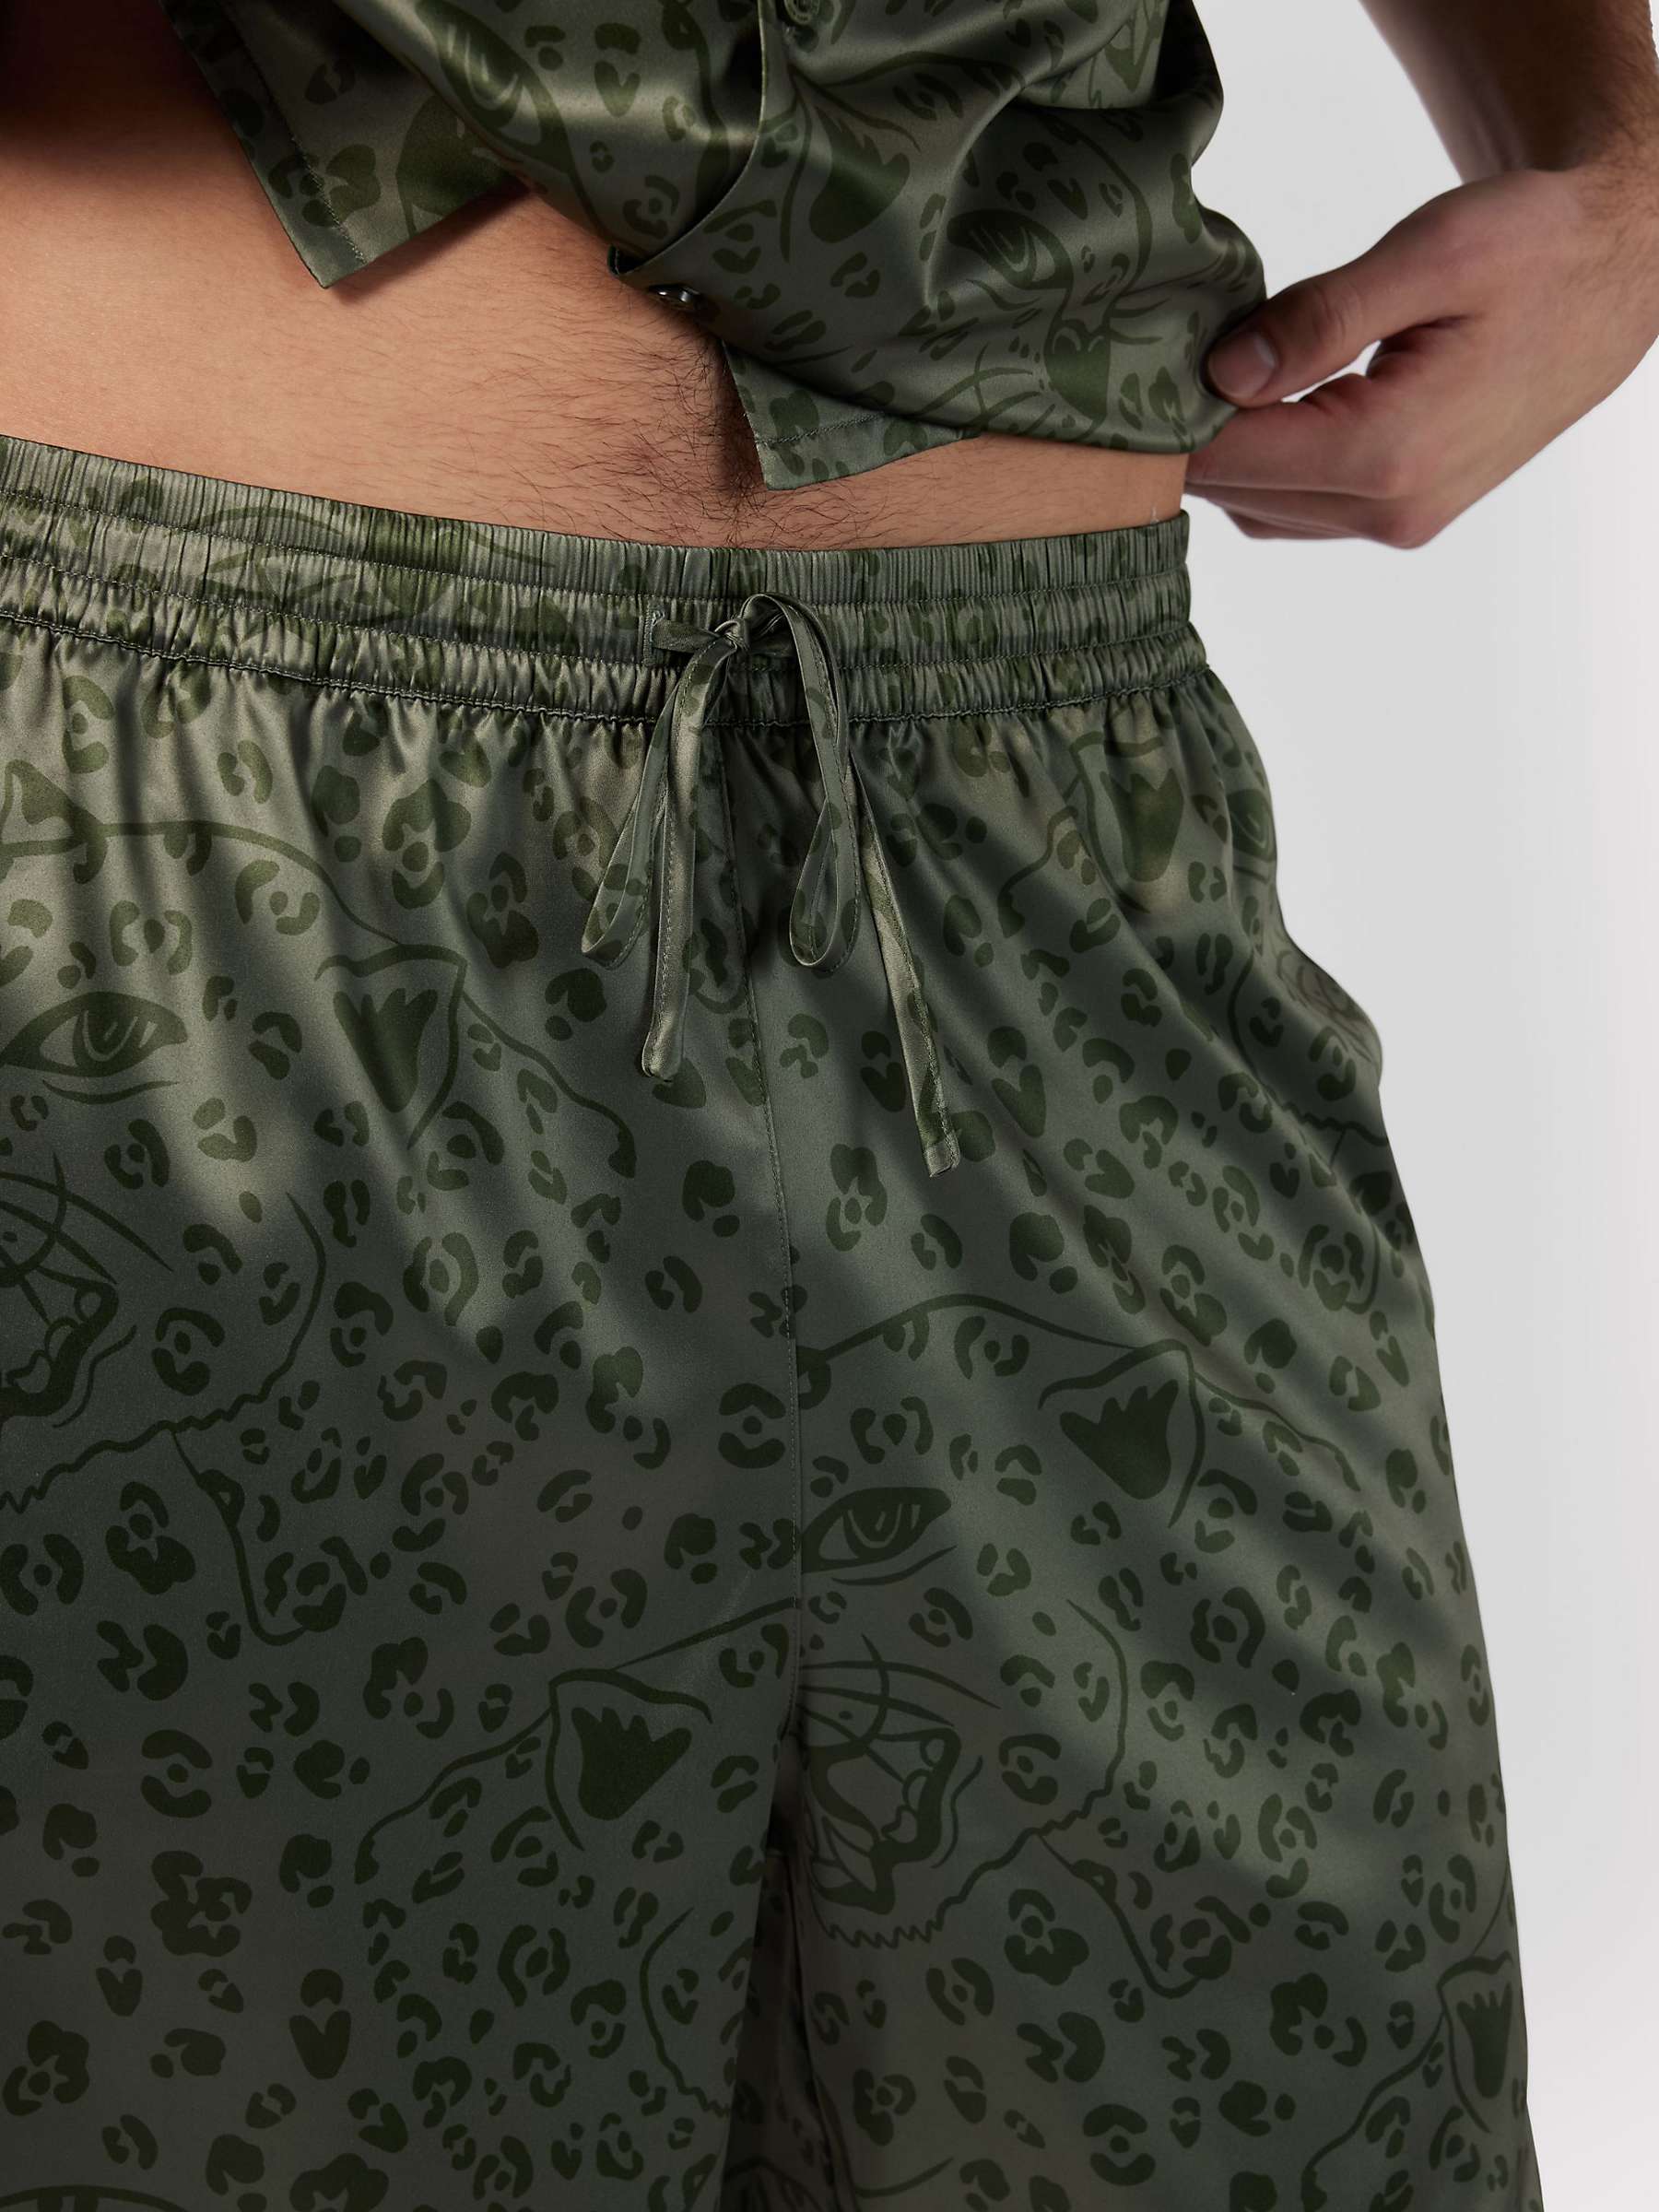 Buy Chelsea Peers Satin Hidden Leopard Print Short Pyjama Set, Khaki Online at johnlewis.com